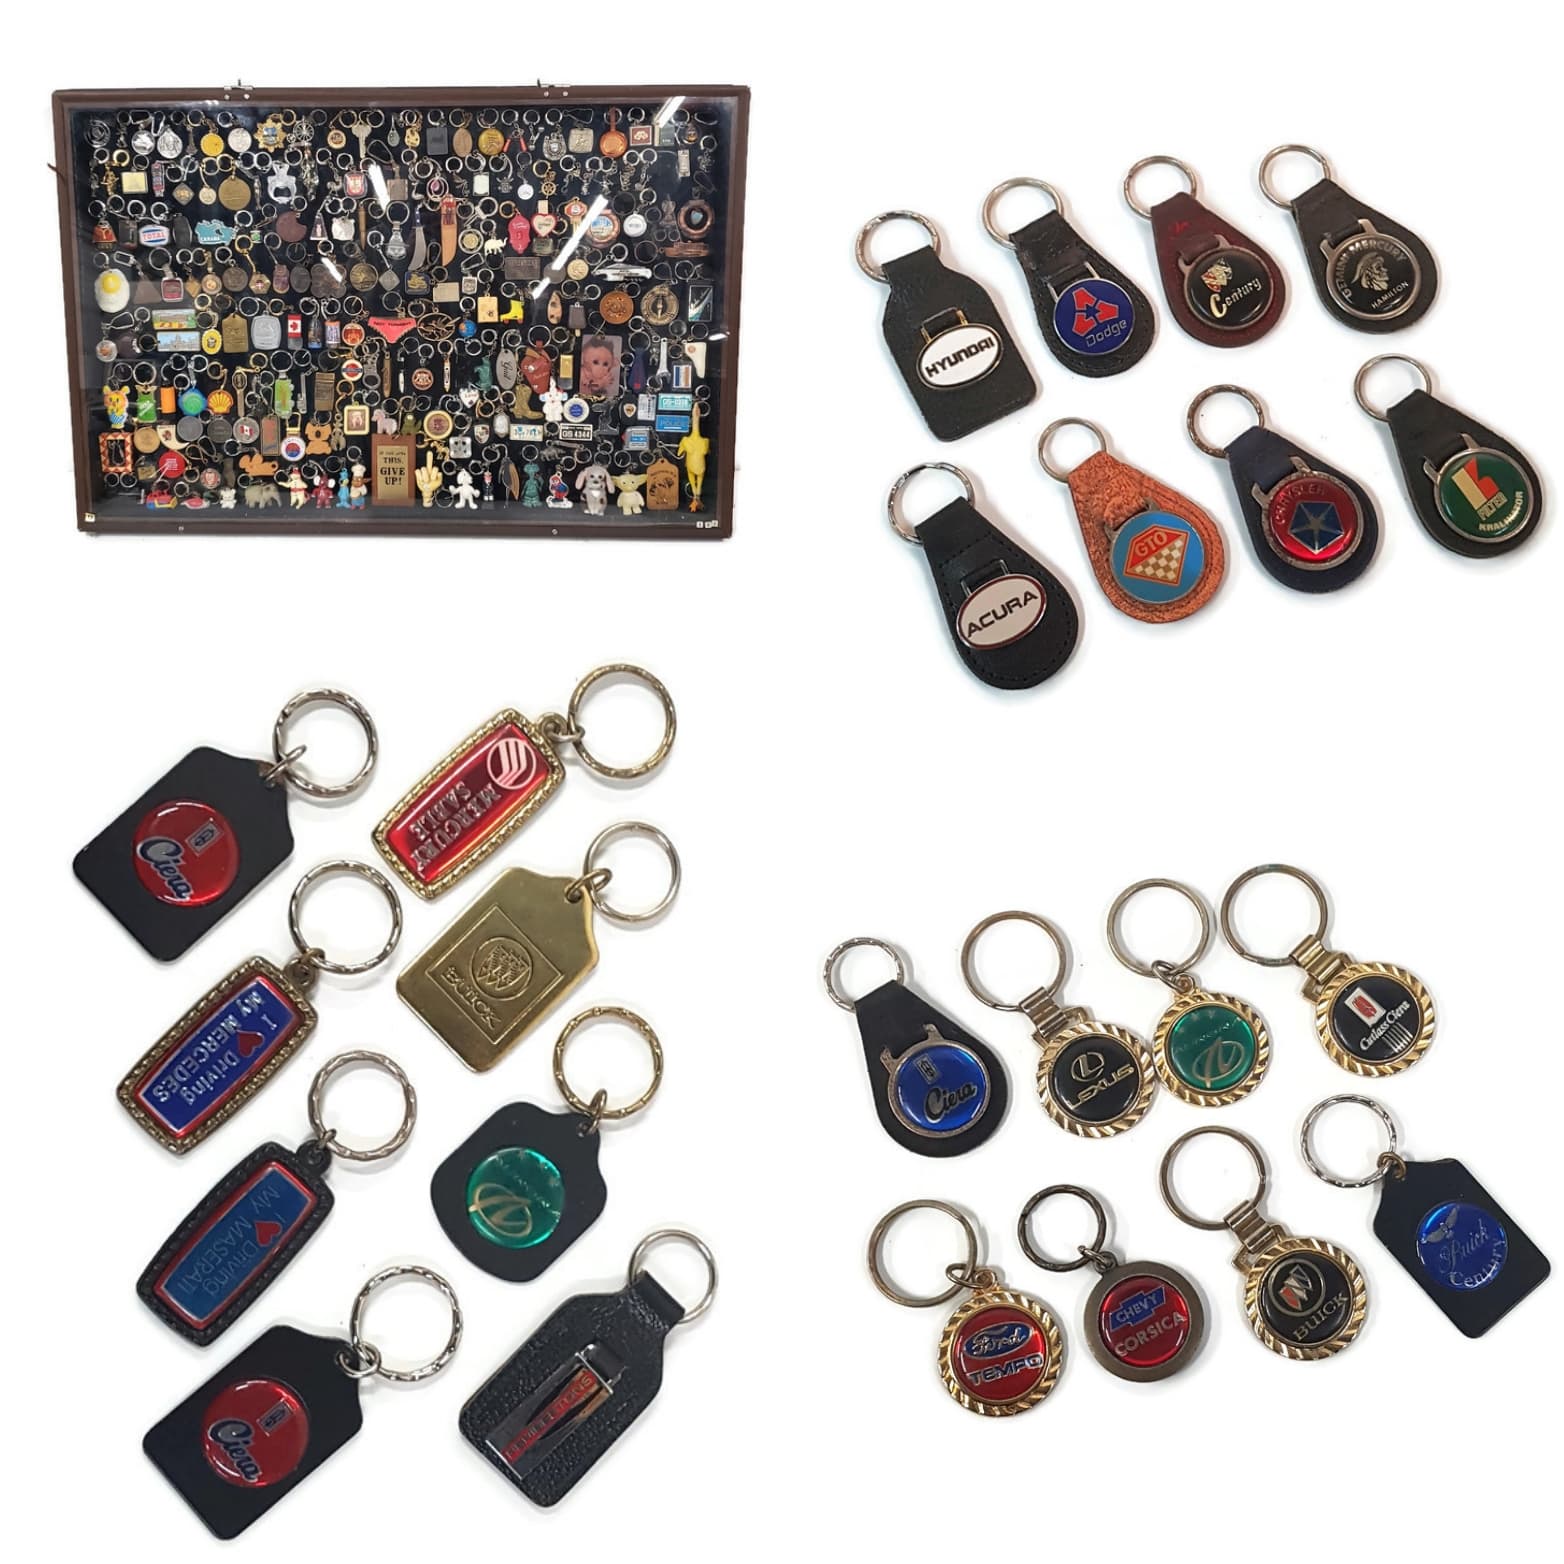 desoto automotive keychain vintage car collectible